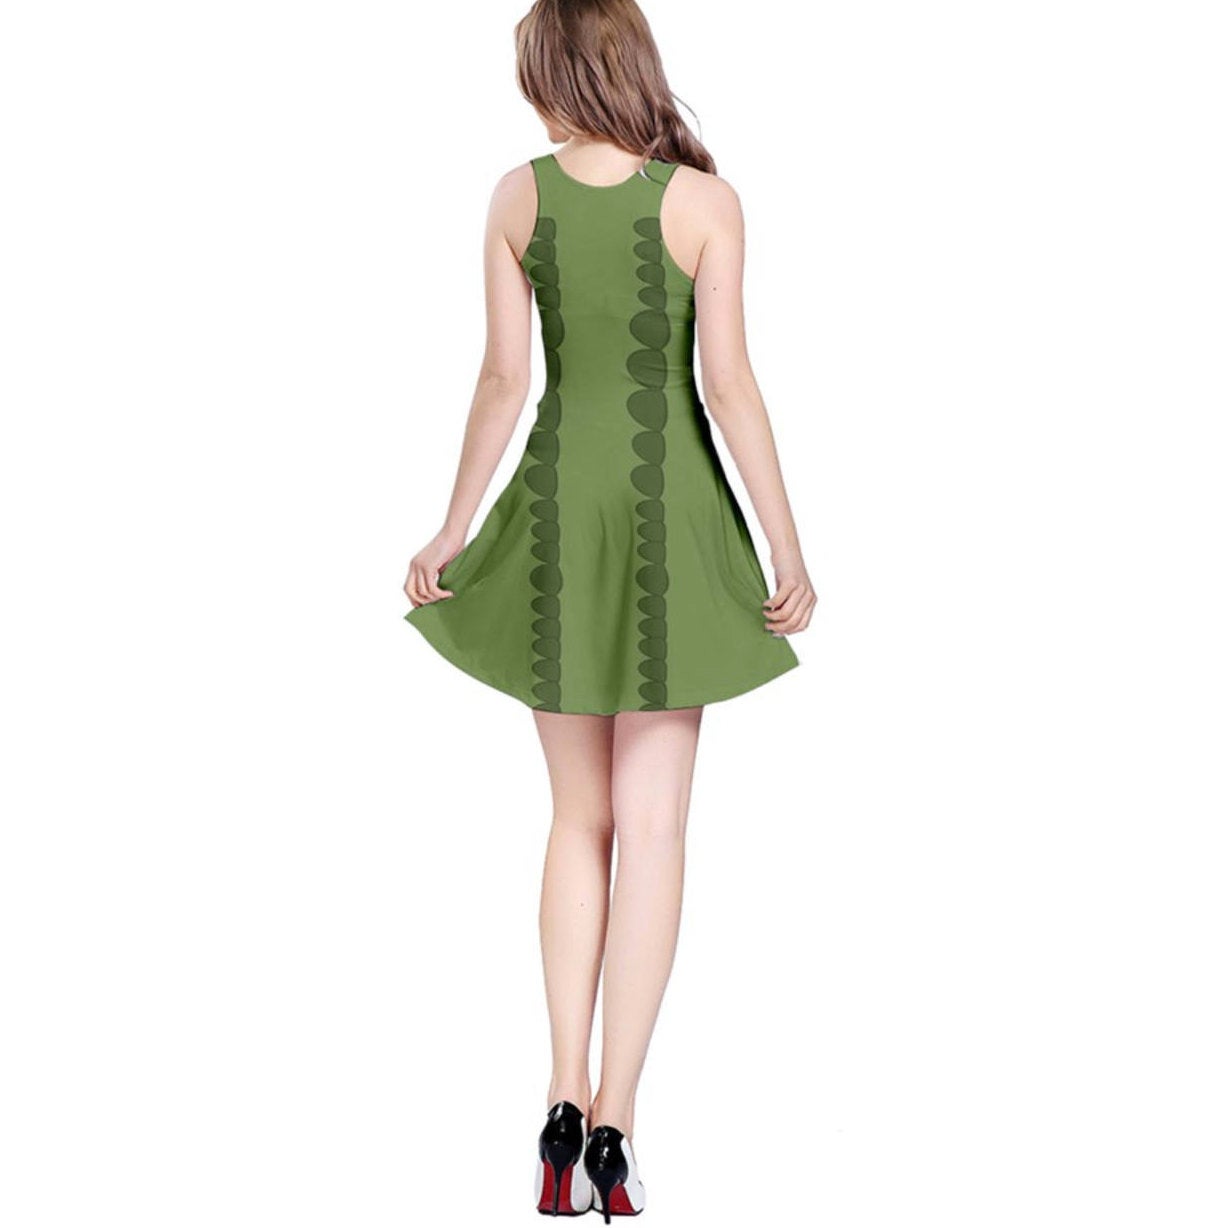 Tick Tock Croc Peter Pan Inspired Sleeveless Dress